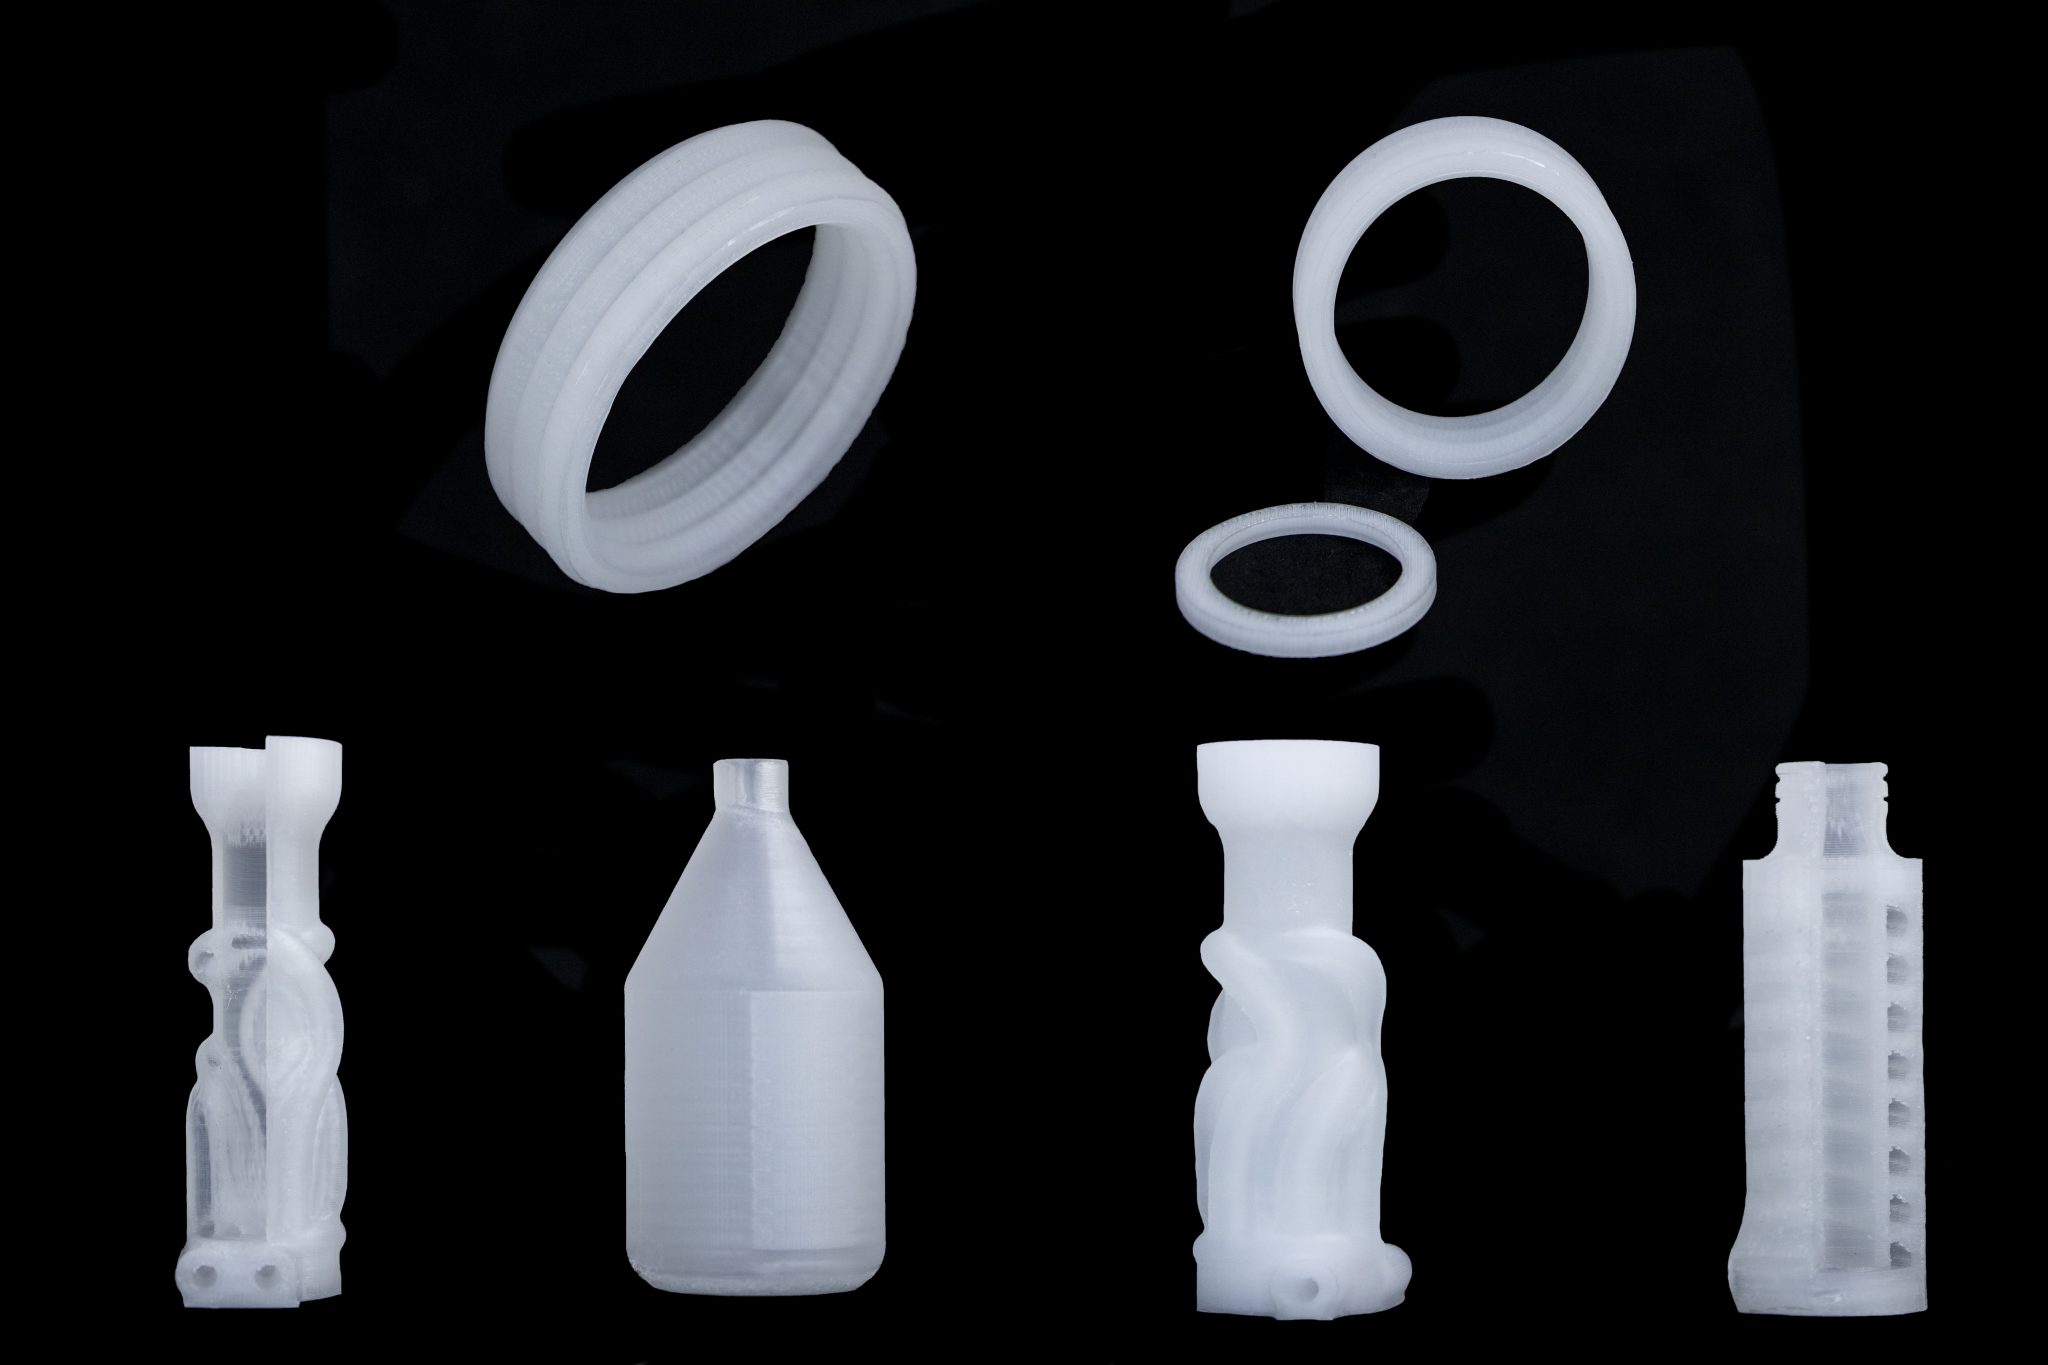 Parts made with Apium’s new 3D printing material, polypropylene. Image via Apium